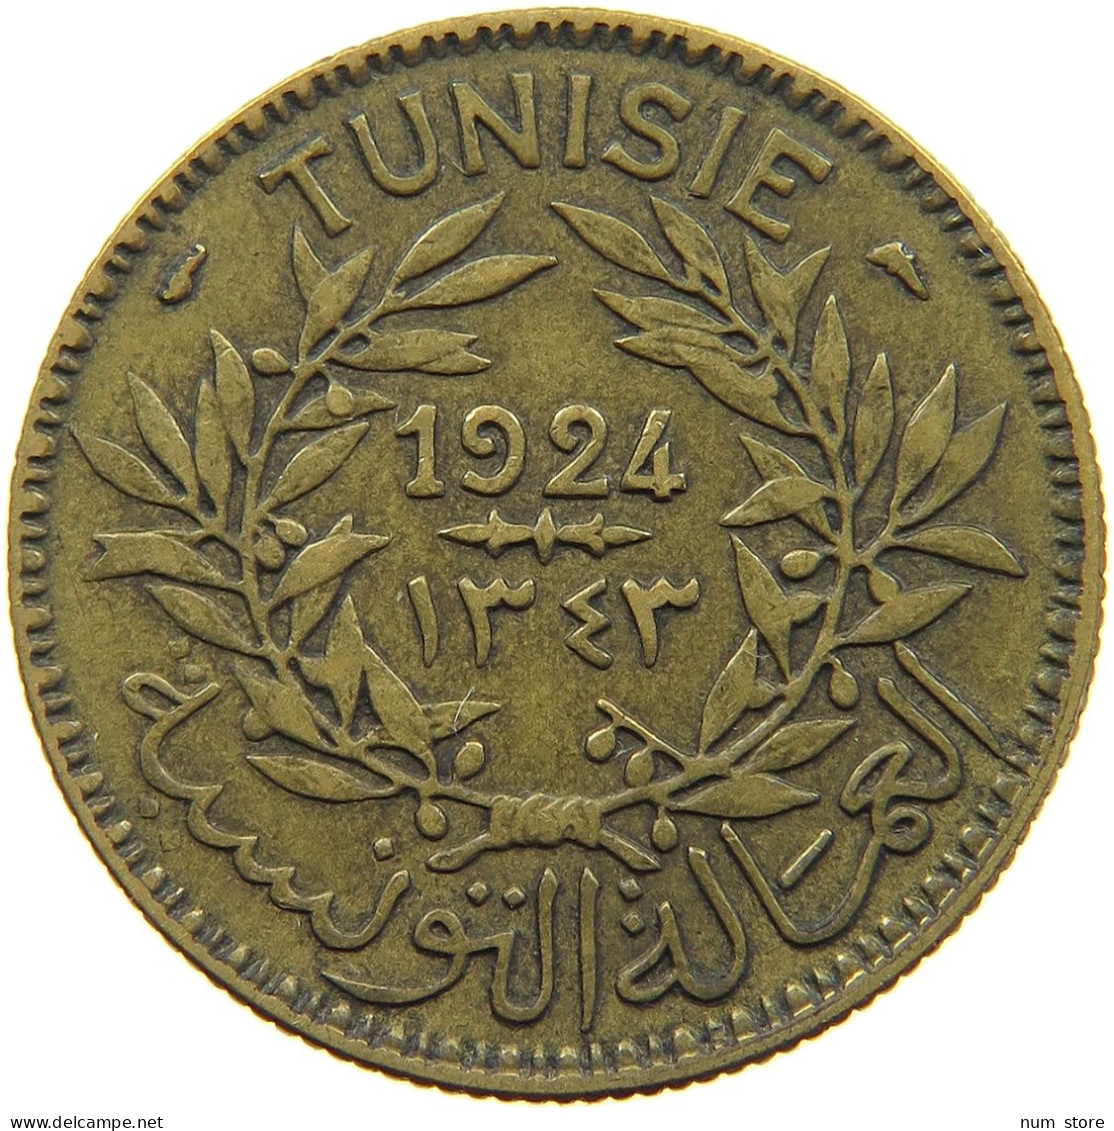 TUNISIA 2 FRANCS 1924  #a093 0719 - Tunisie